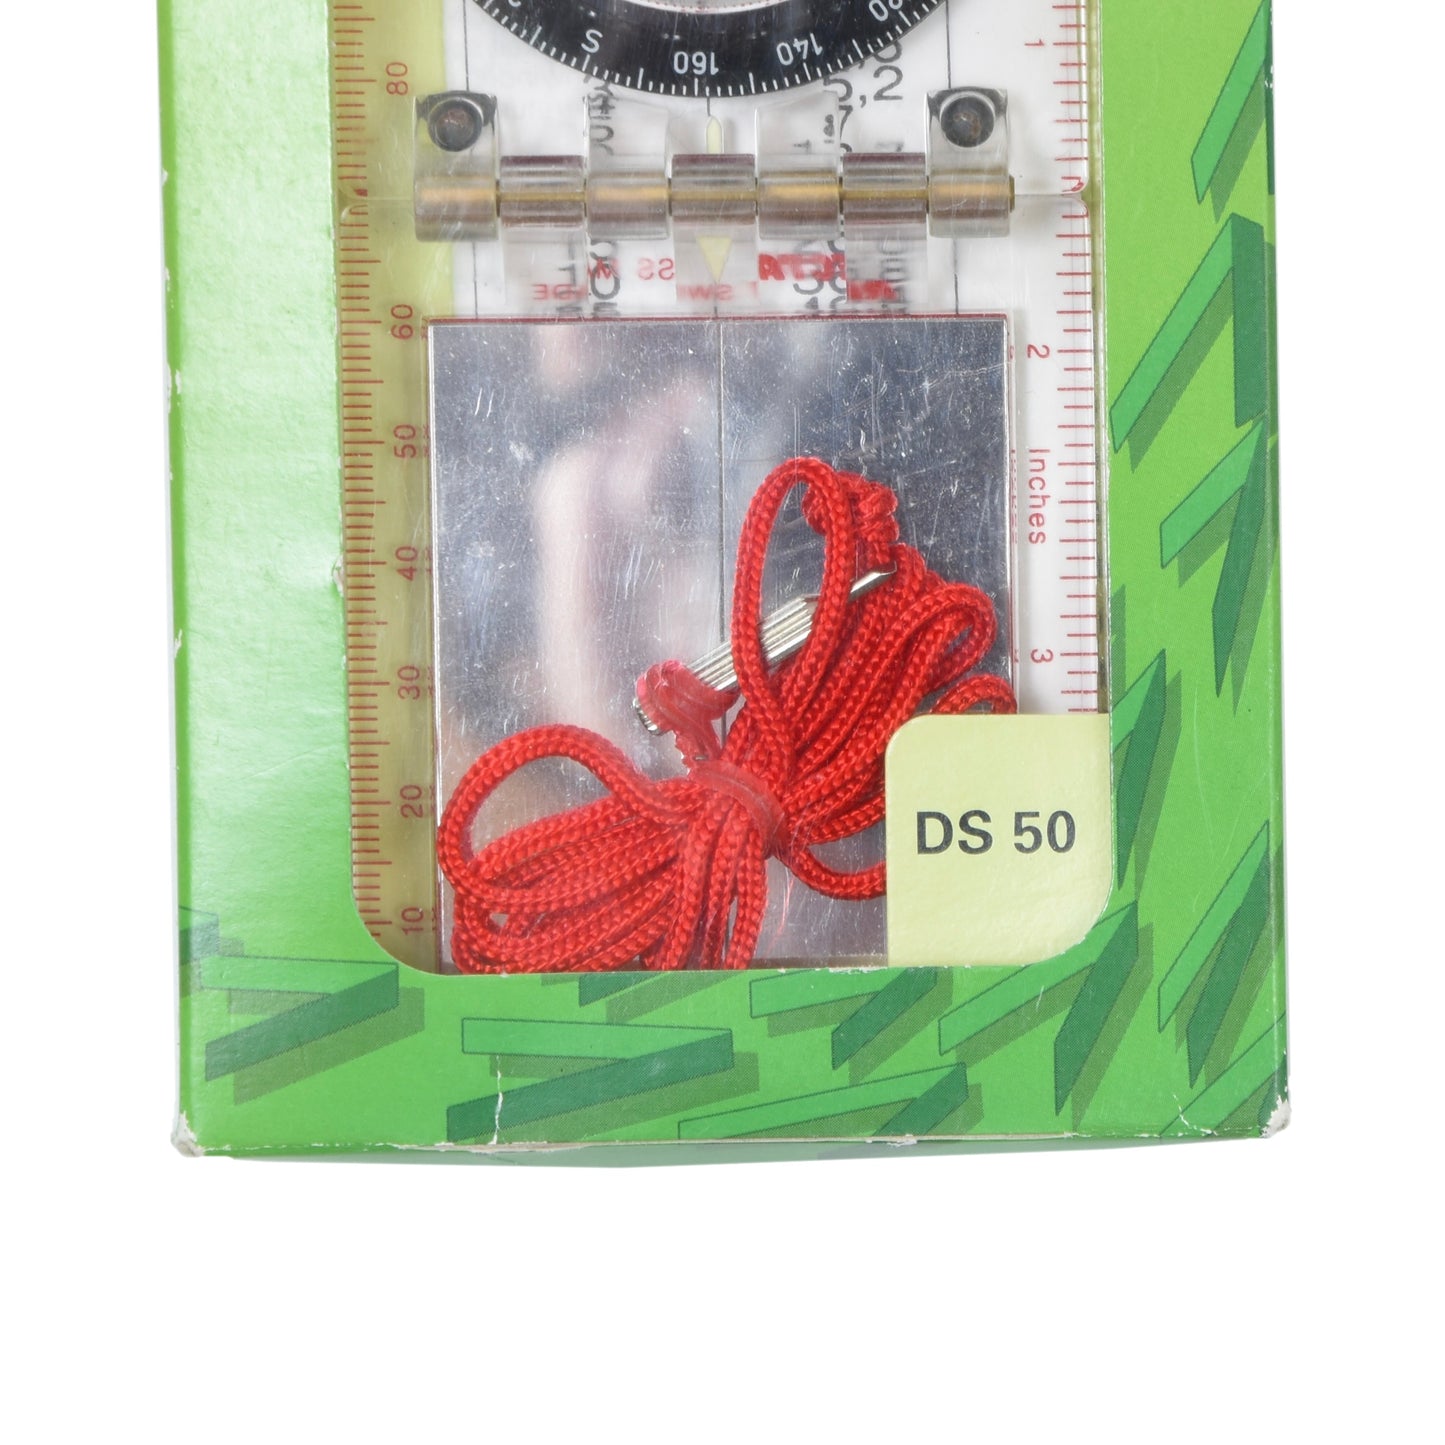 Recta Compass Type Mod. DS 50